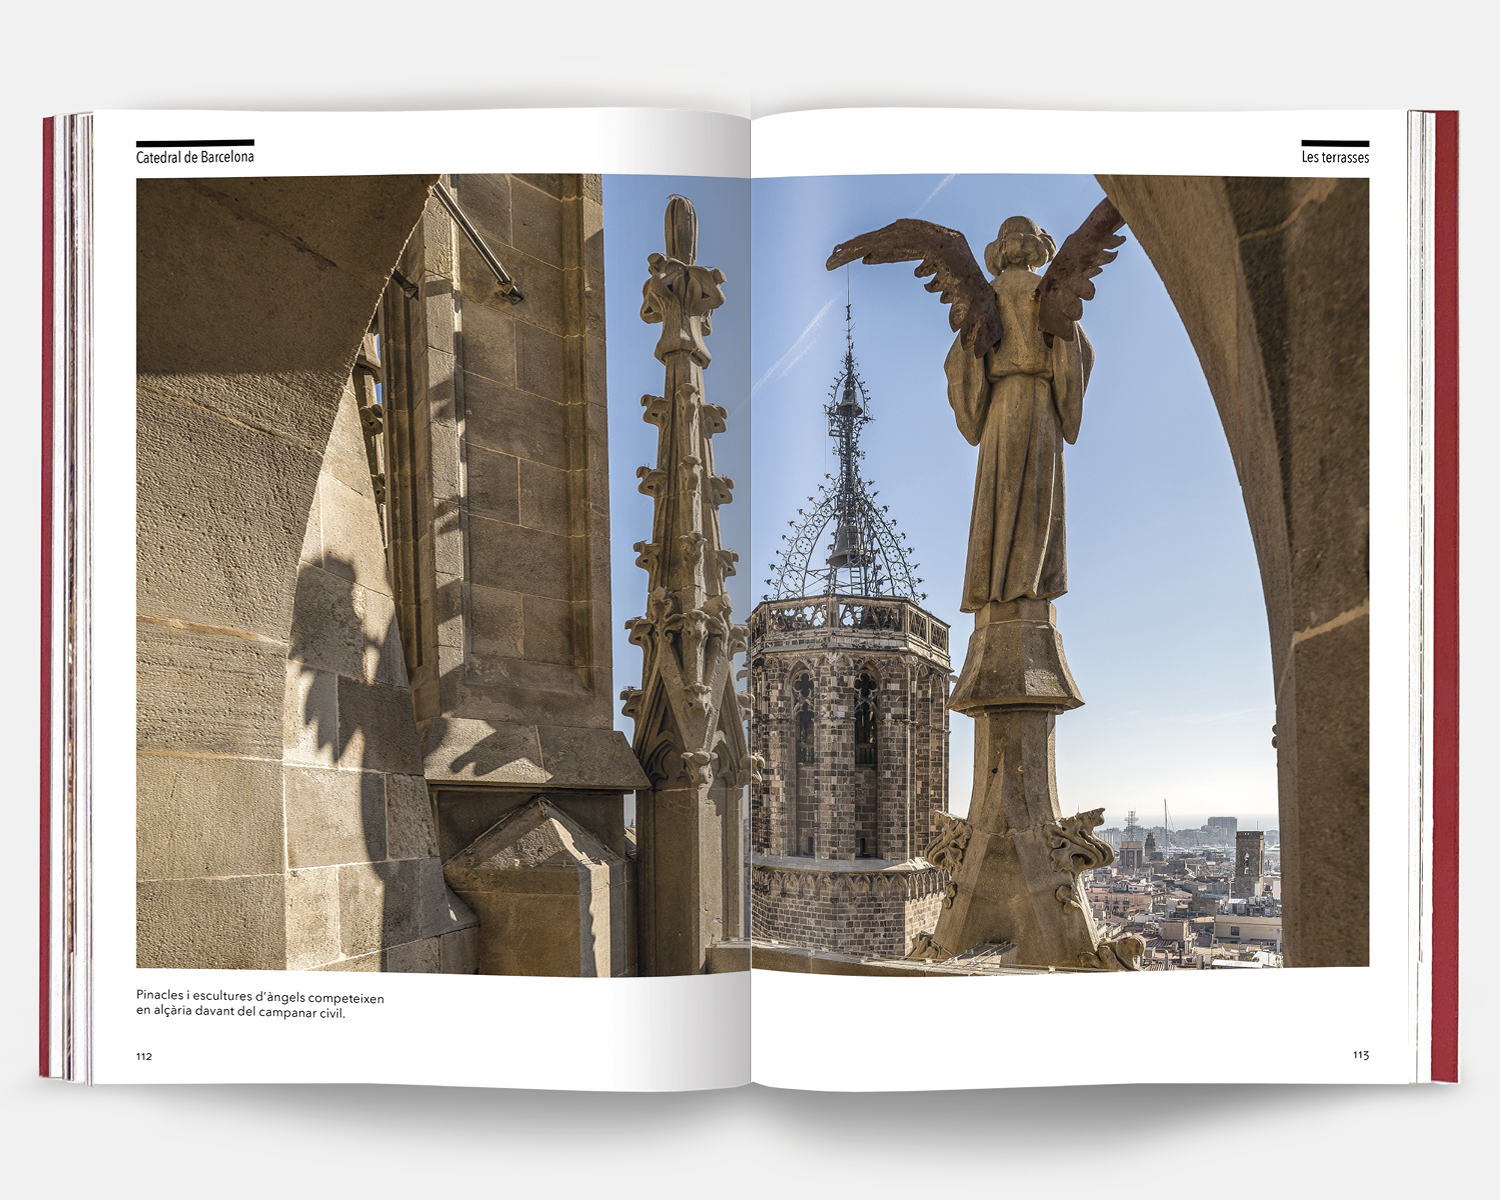 Guide de Cathédrale de Barcelone gbc 8